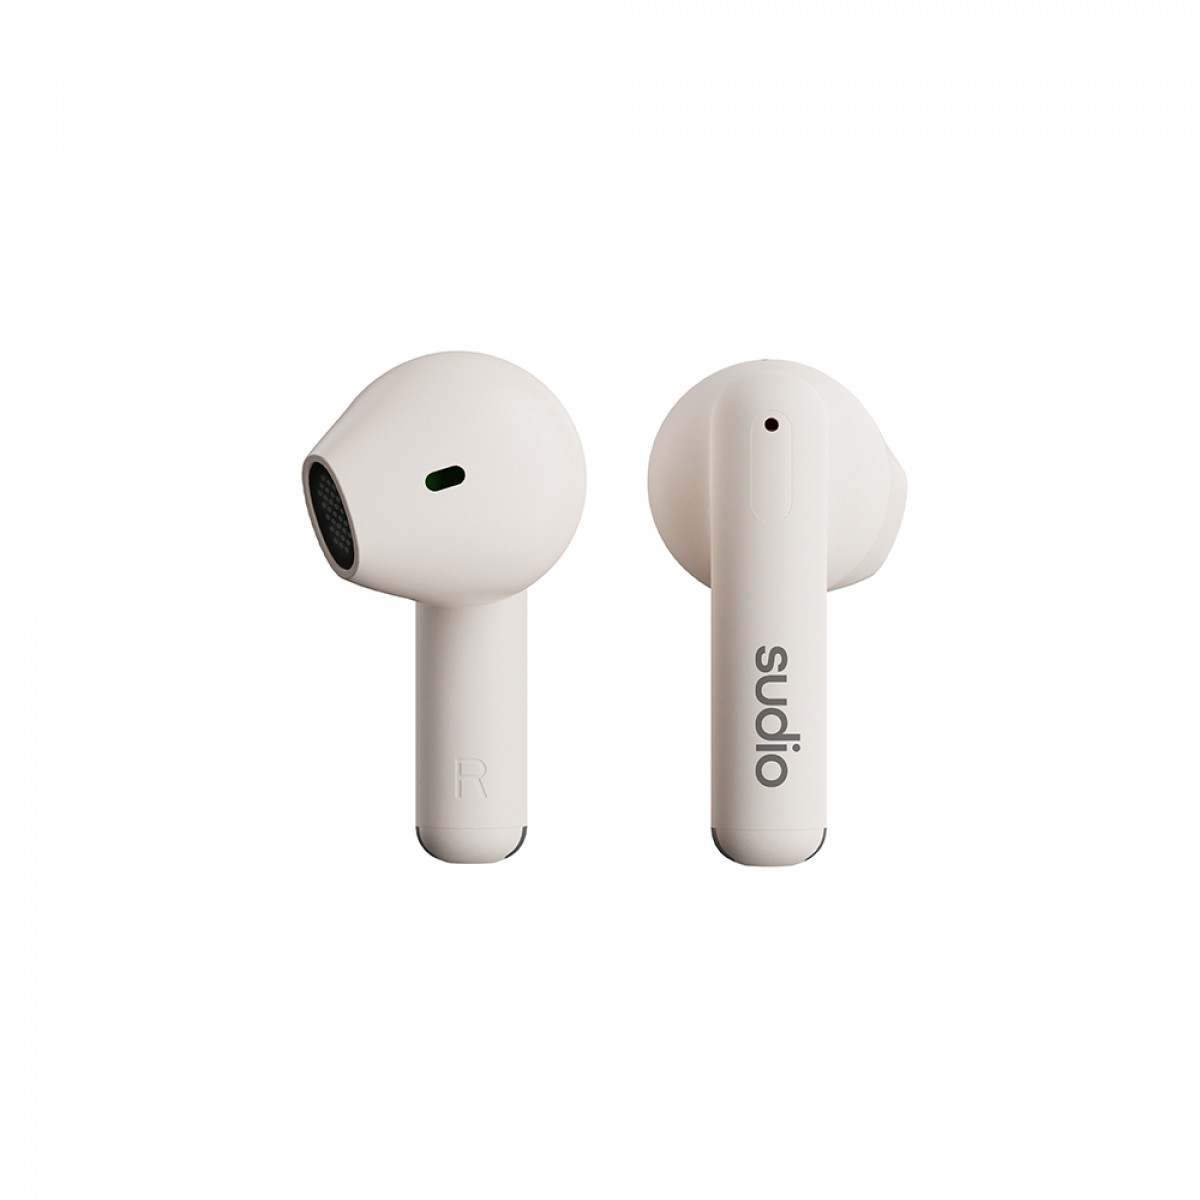 TWS Weiß, Weiß In-Ear In-ear Kopfhörer A1 Kopfhörer Bluetooth SUDIO